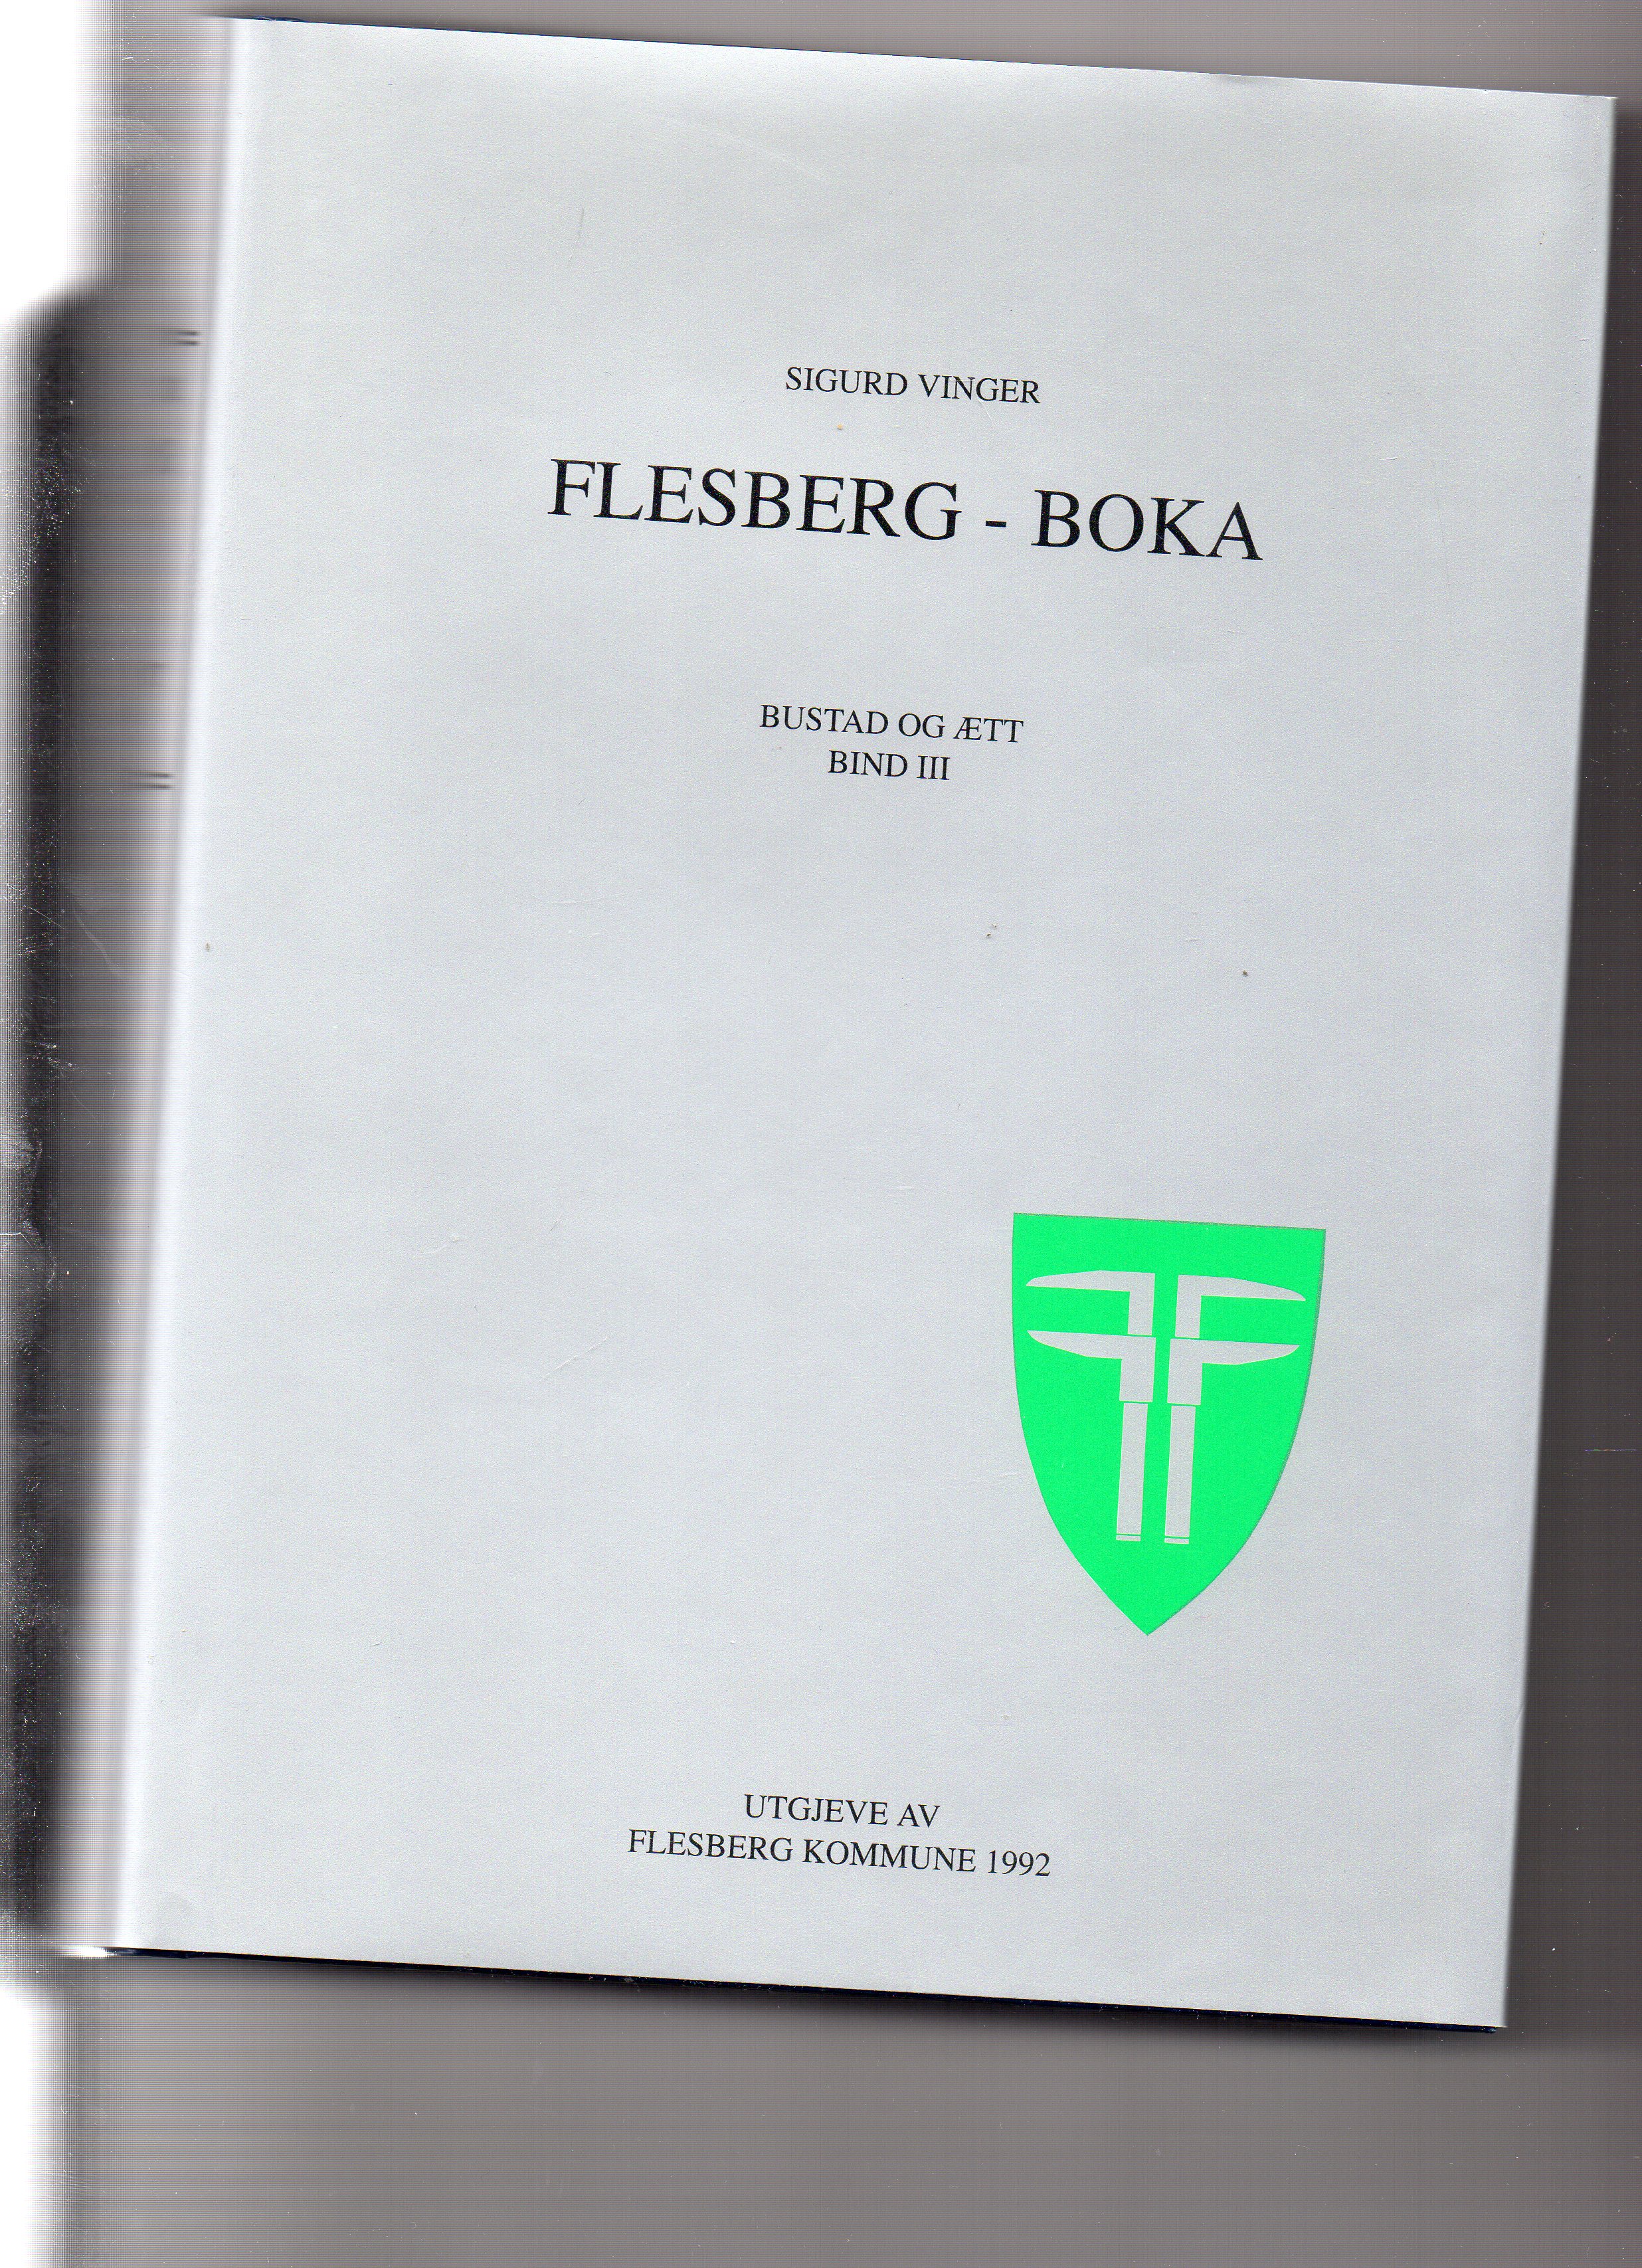 Flesbergboka Sigurd Vinger Bustad og ætt Bind III smussbind pen 1992